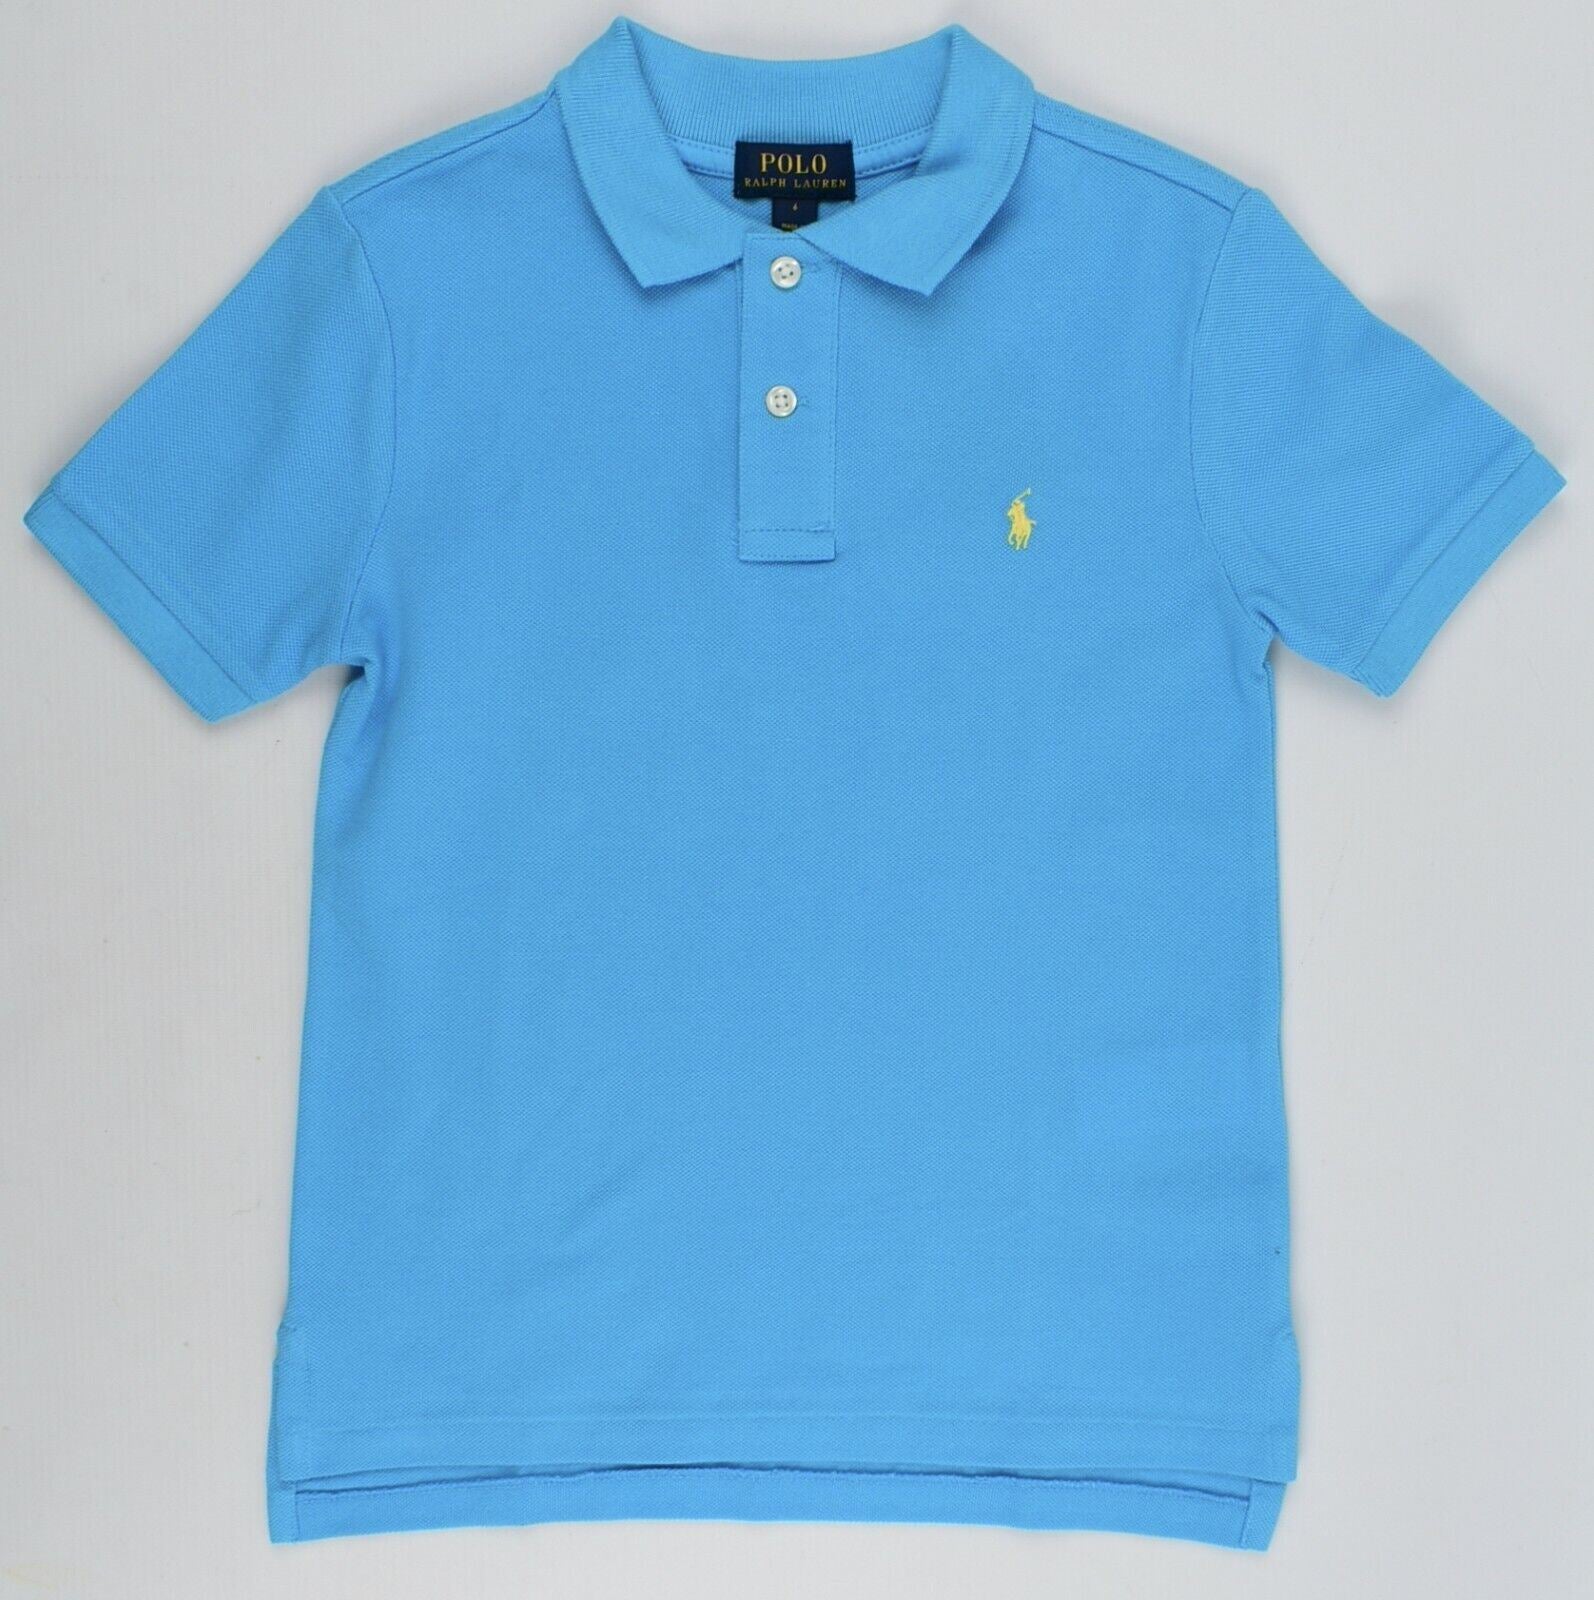 POLO RALPH LAUREN Boys' Kids' Polo Shirt, Turquoise Blue, size 6 years